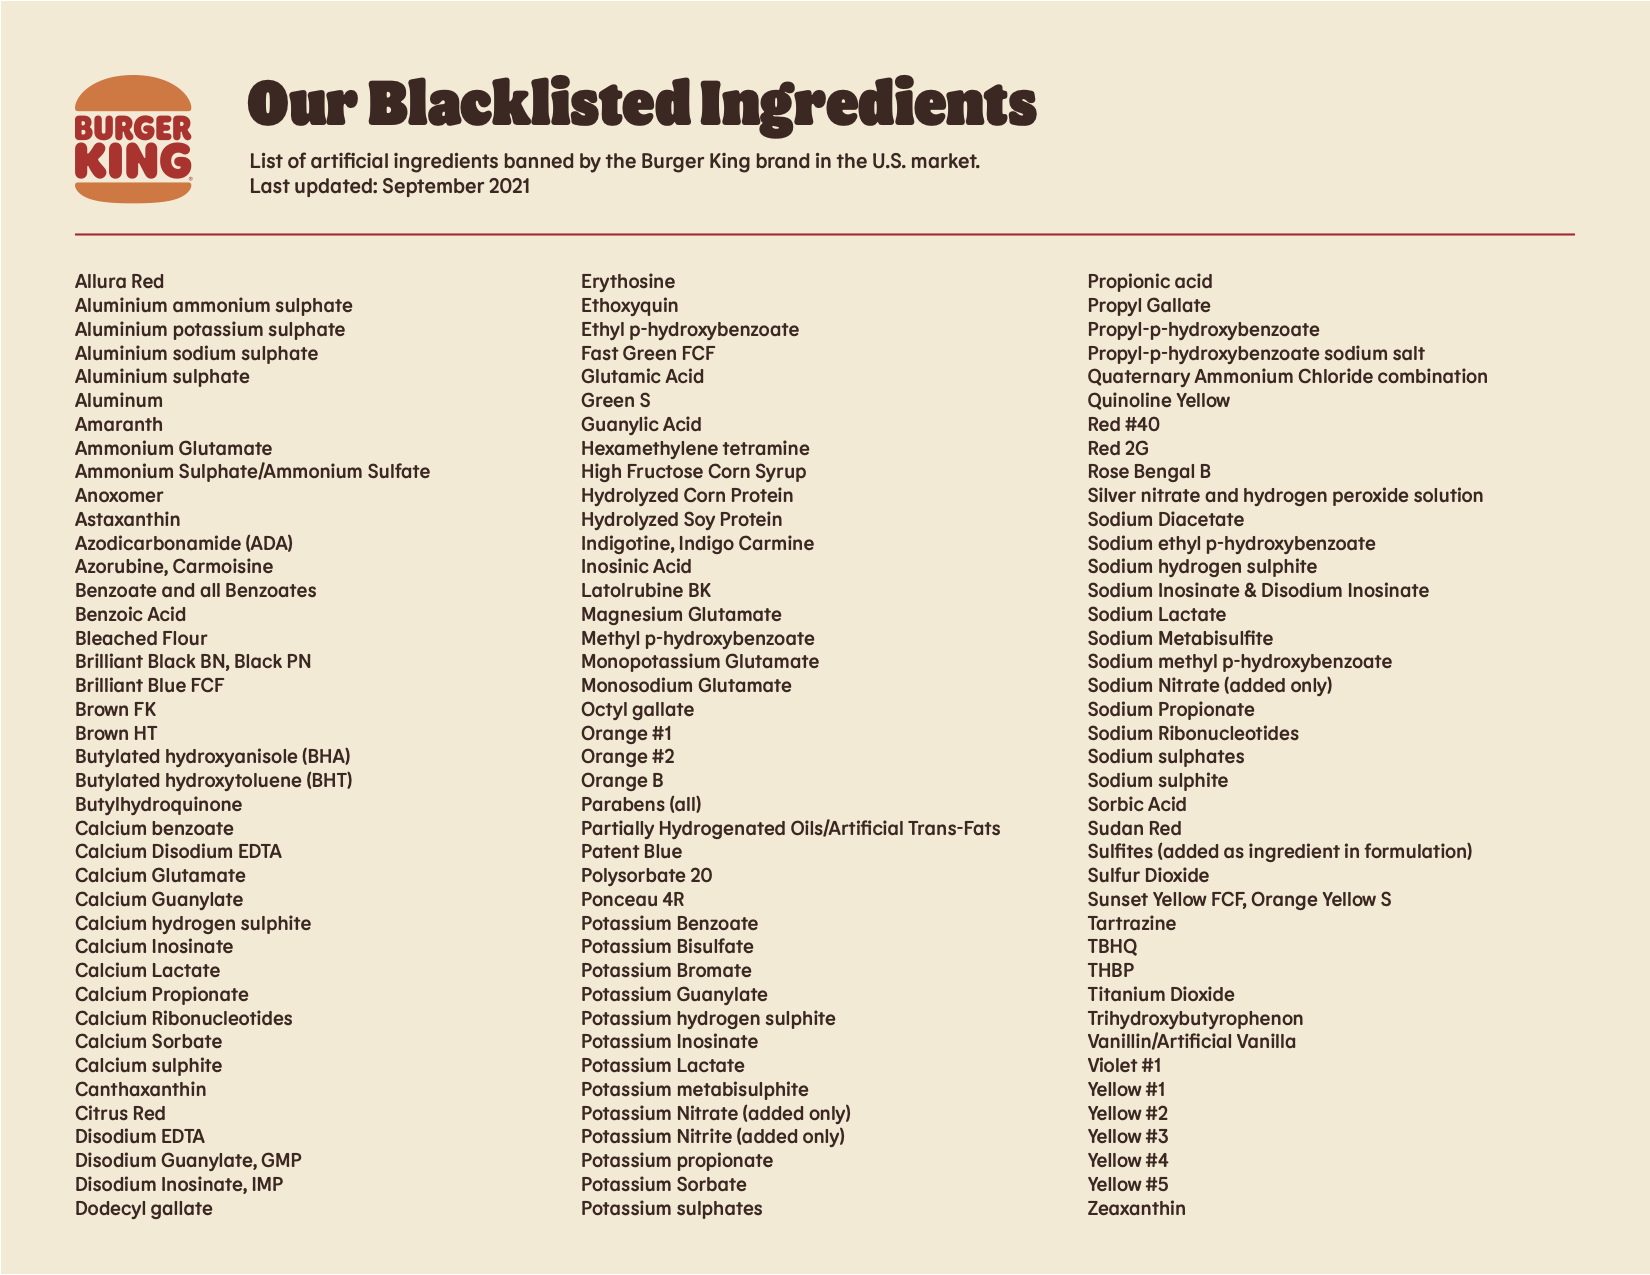 Bk banned ingredients